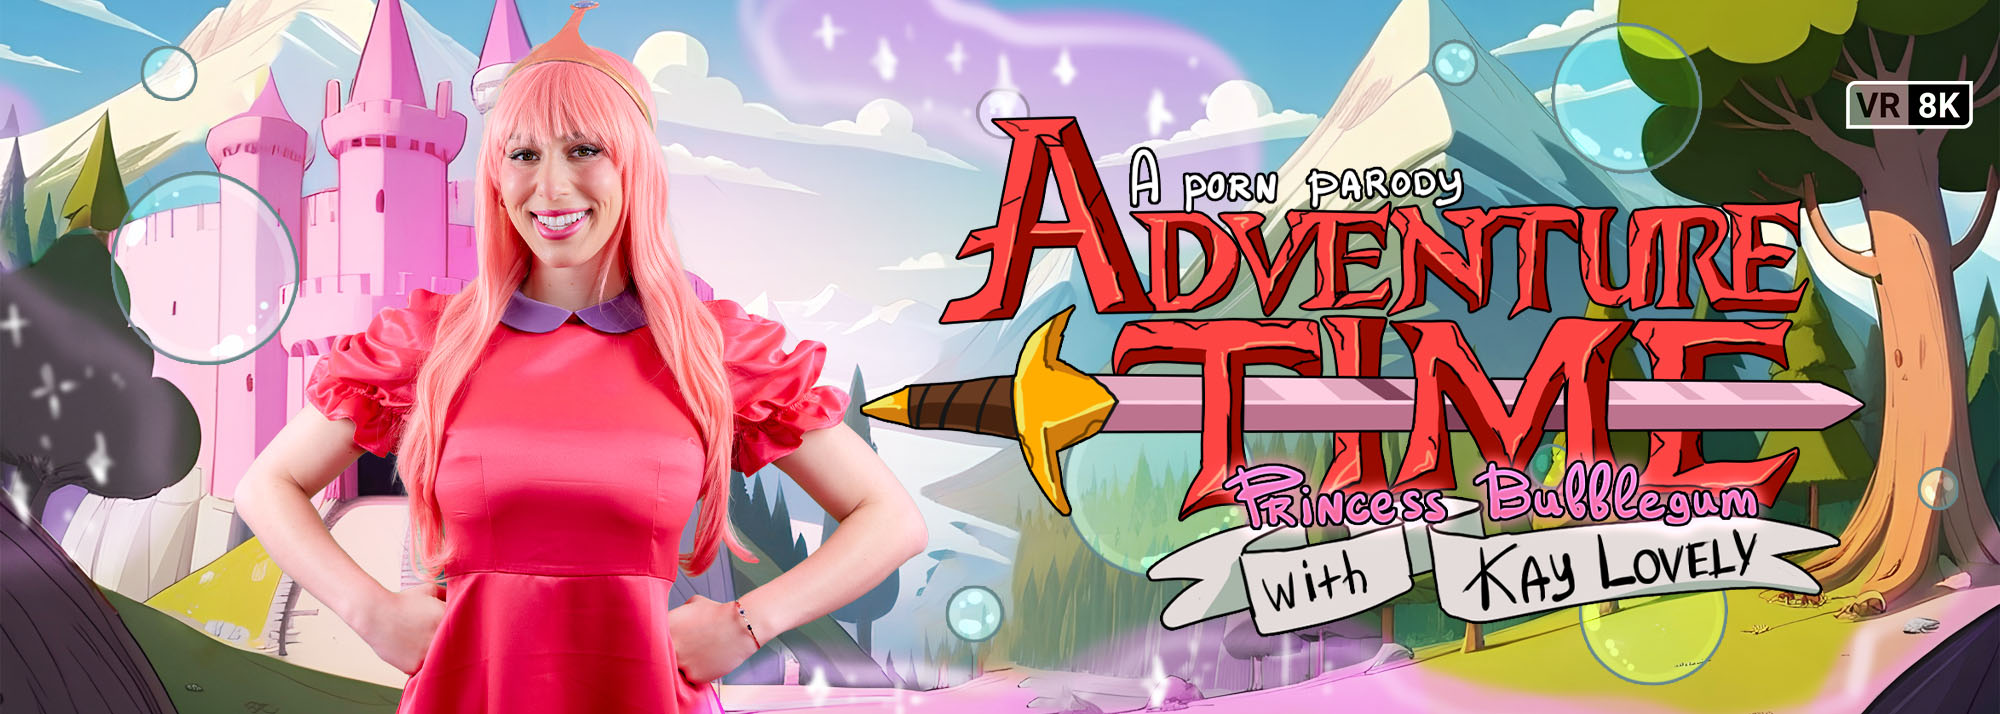 Adventure Time Blowjob - Adventure Time: Princess Bubblegum (A Porn Parody) - Cosplay VR Porn Video  | VR Conk